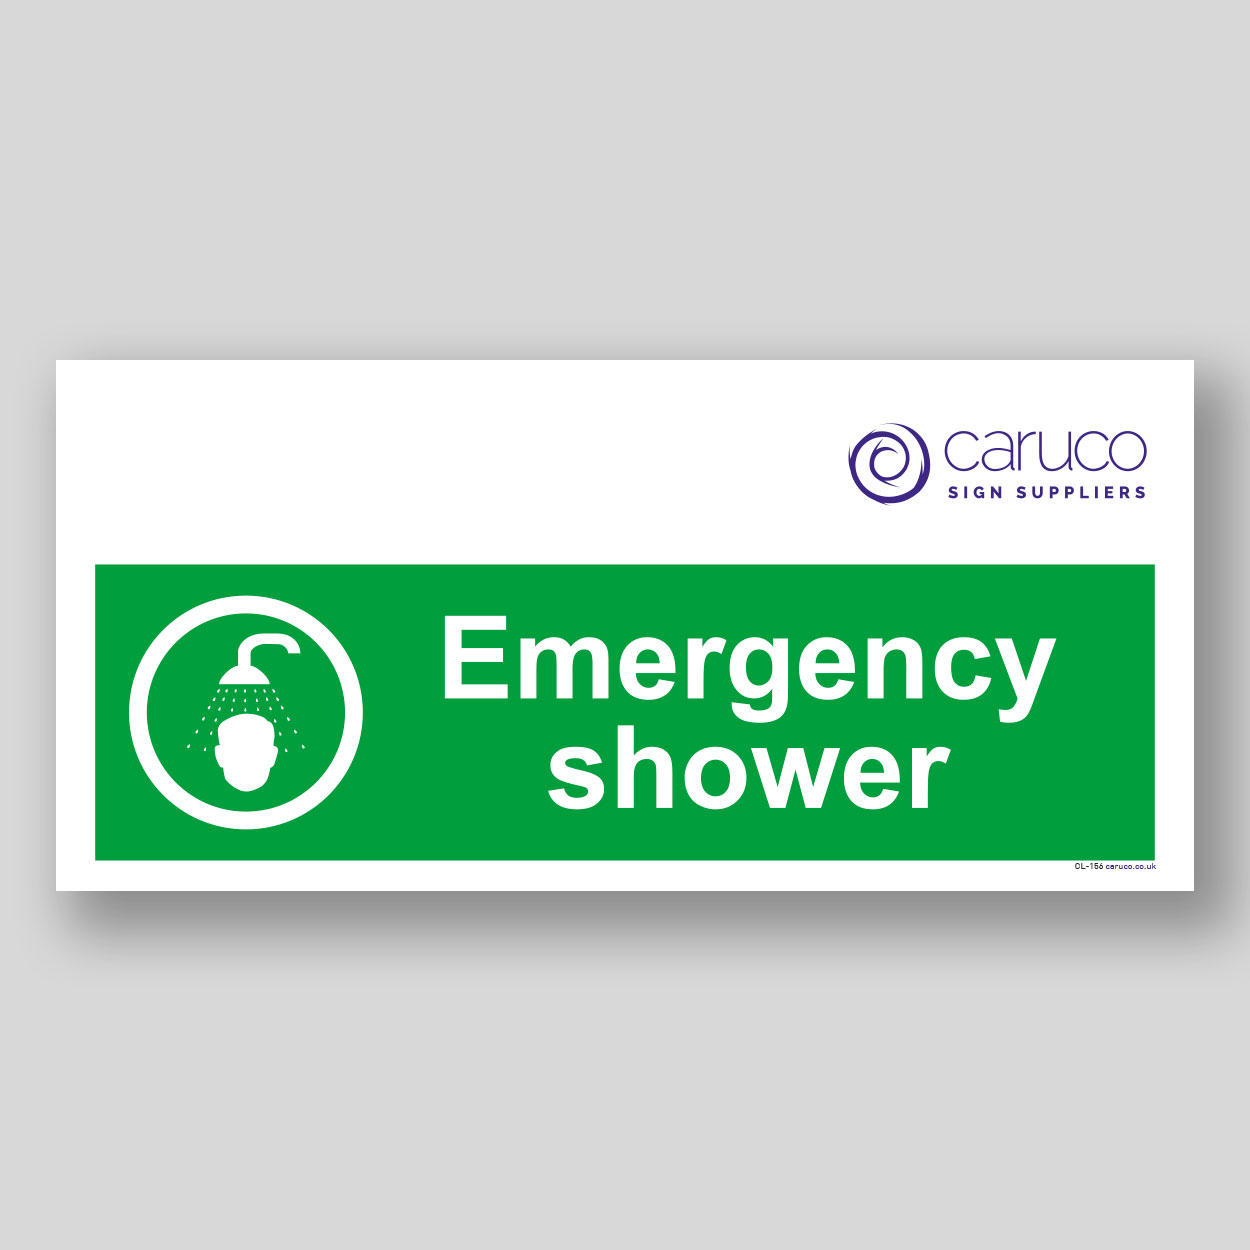 CL-156 Emergency shower